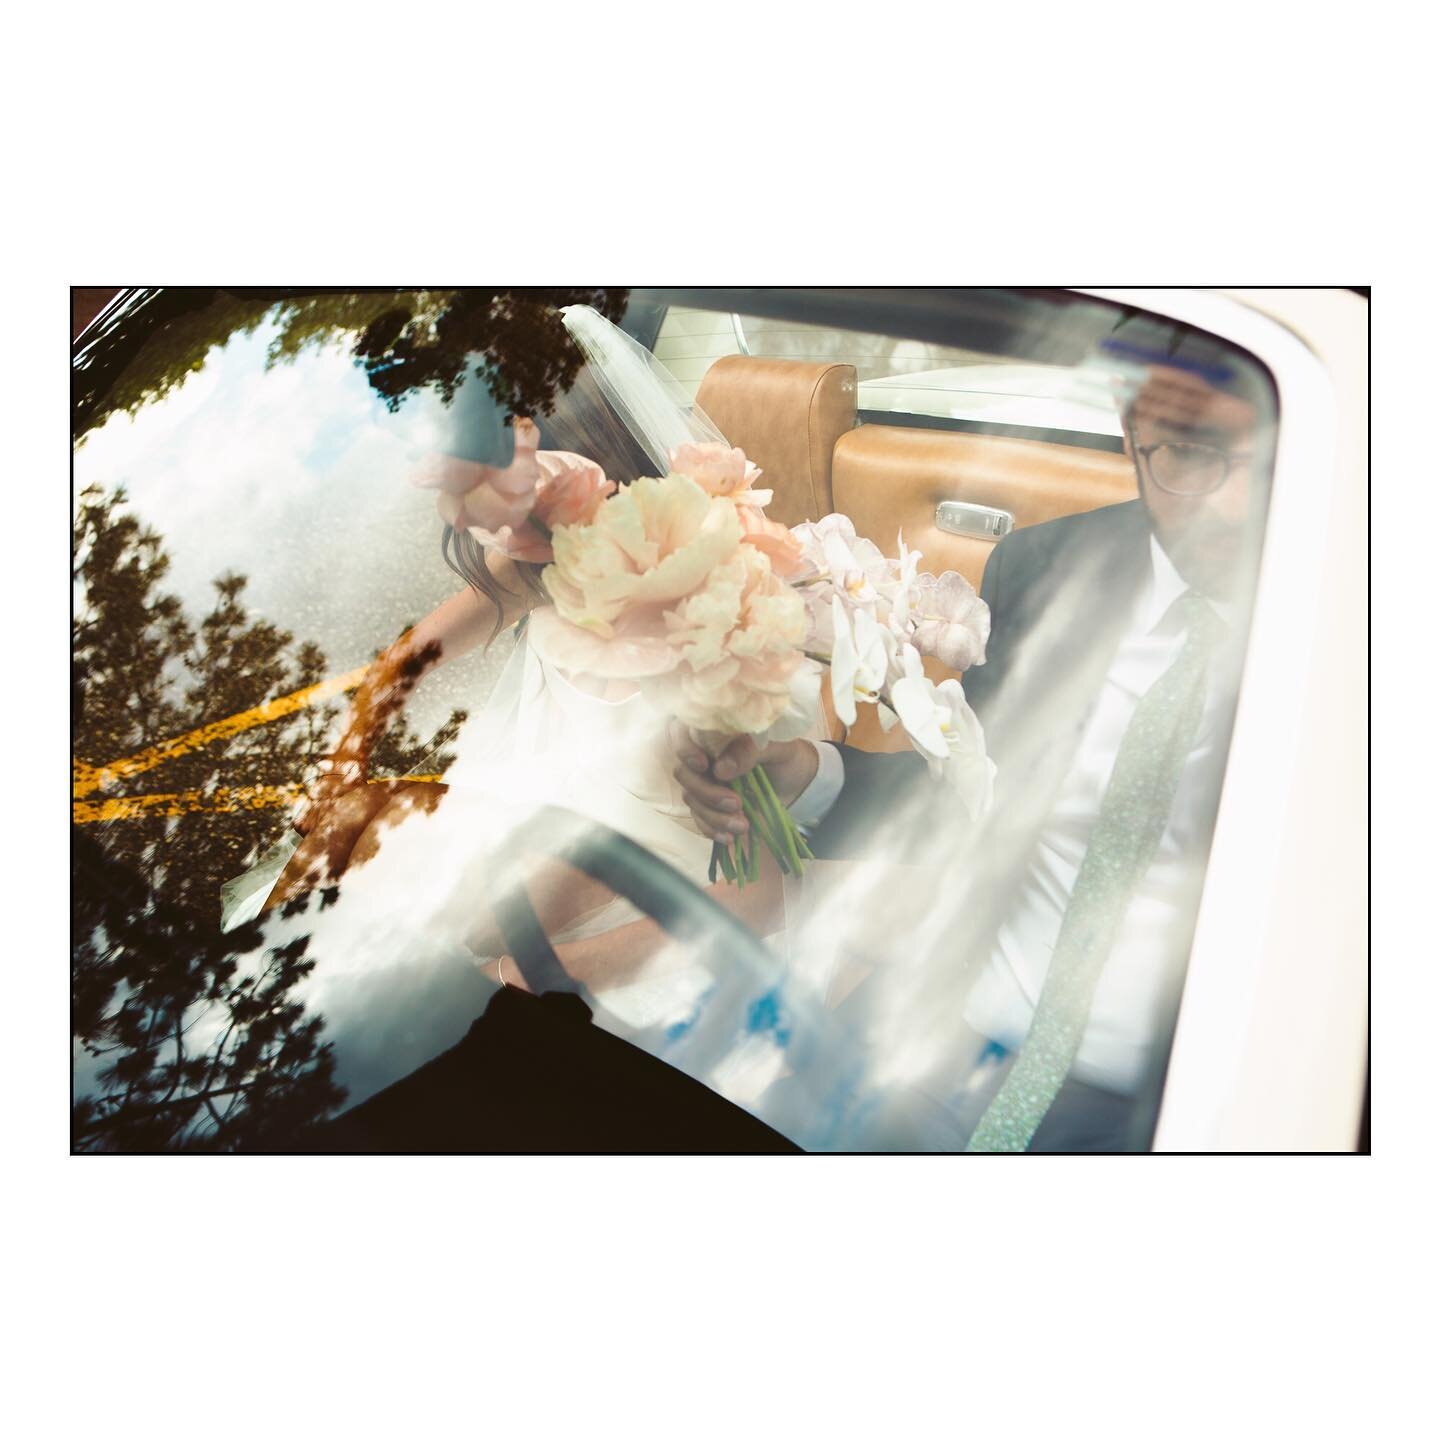 The getaway car was iconic. - show you more soon

Andrew + Olivia 
Planner//Florist | @mavenevents 
Venue @nicolletislandpavilion 
Assisting for @jolsonweddings 
.
.
.
.
.
.
.
#minneapolisweddingphotographer #mnweddingphotographer #minneapolisphotogr